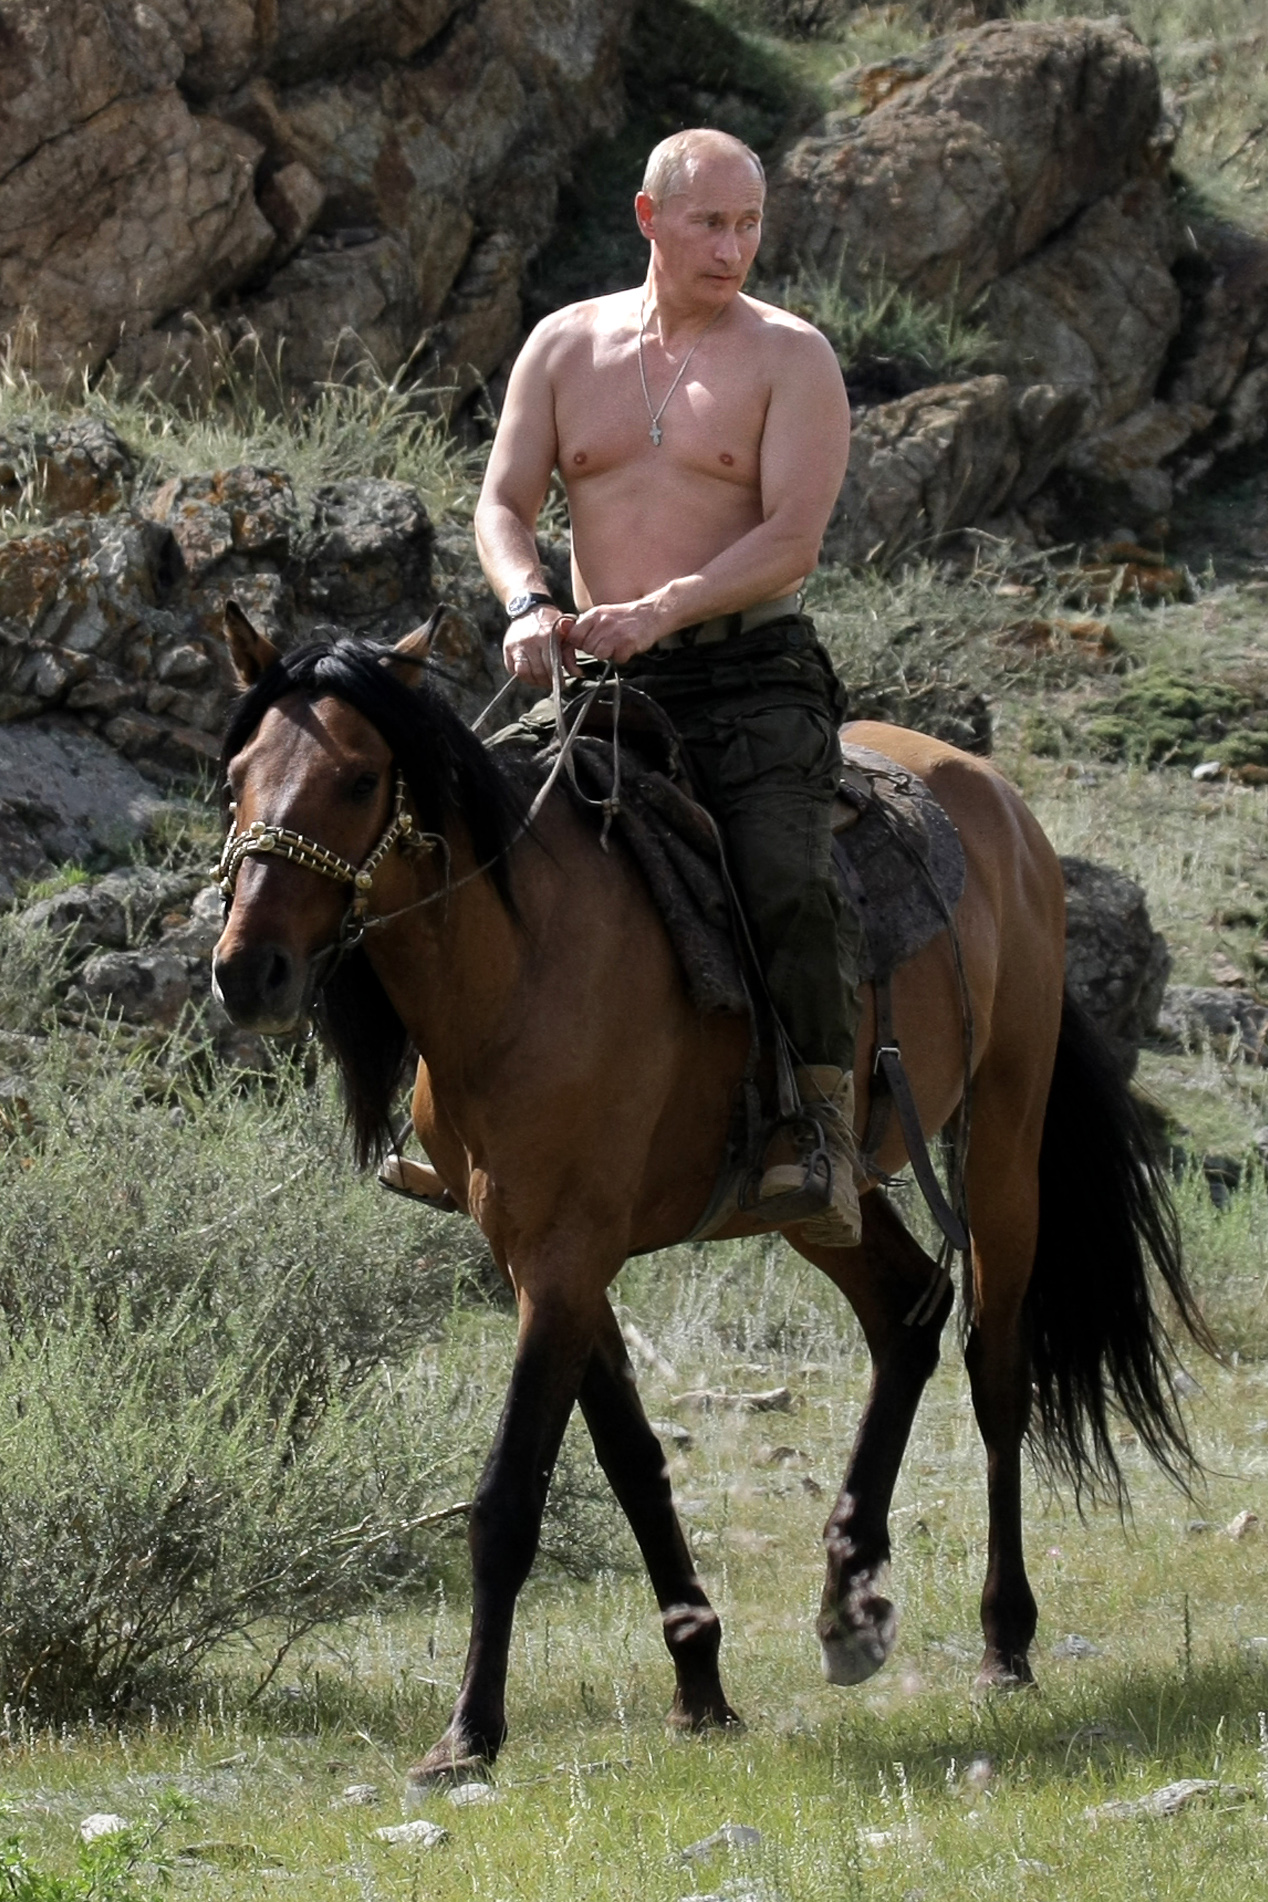 The macho pursuits of Russian President Vladimir Putin Photos | Image #101  - ABC News